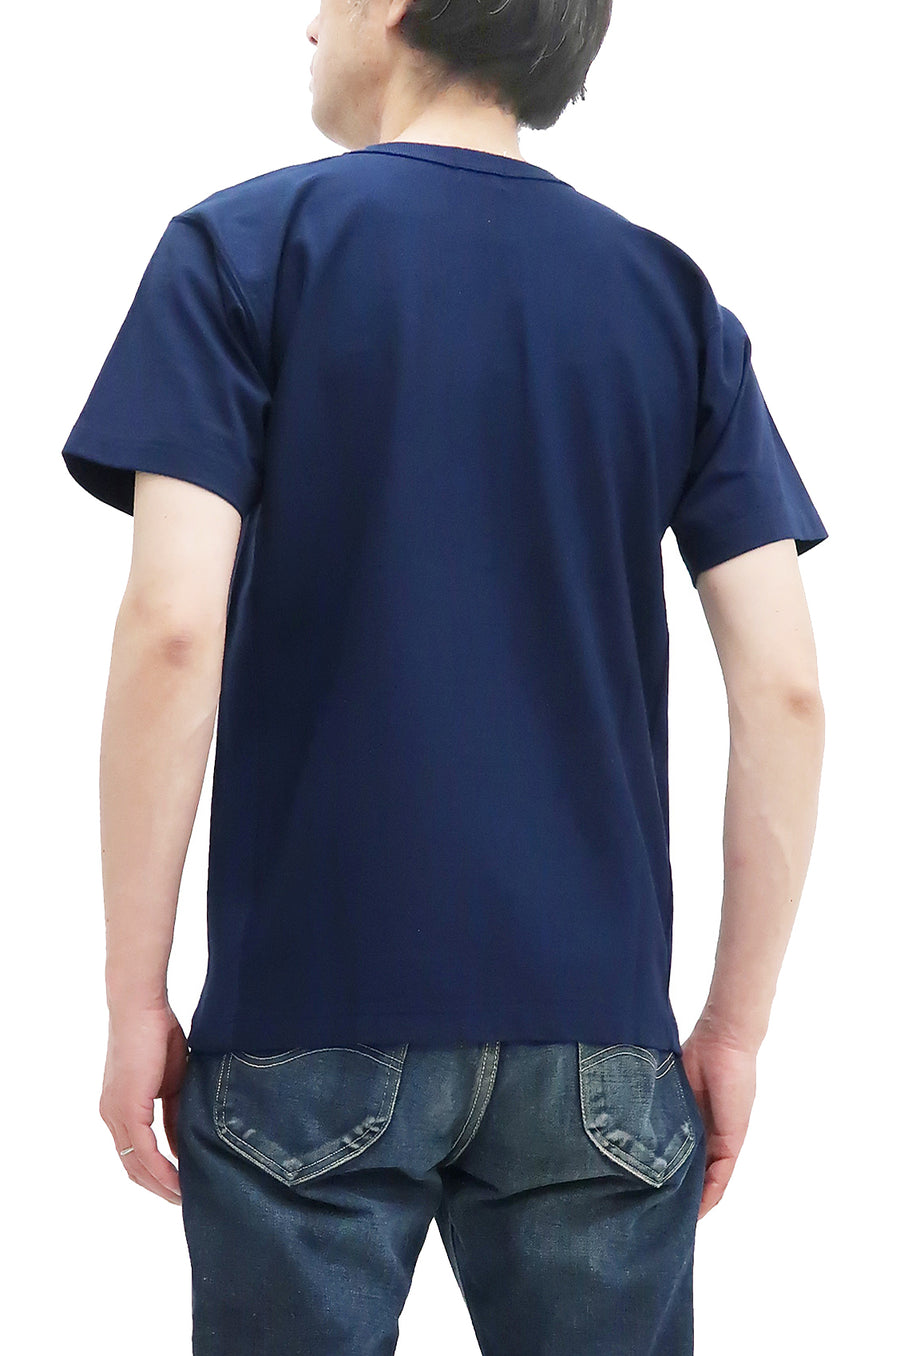 Whitesvill Plain T-shirt with Rib Side Panels Men's Heavyweight Short Sleeve Tee WV78930 128 Dark-Blue